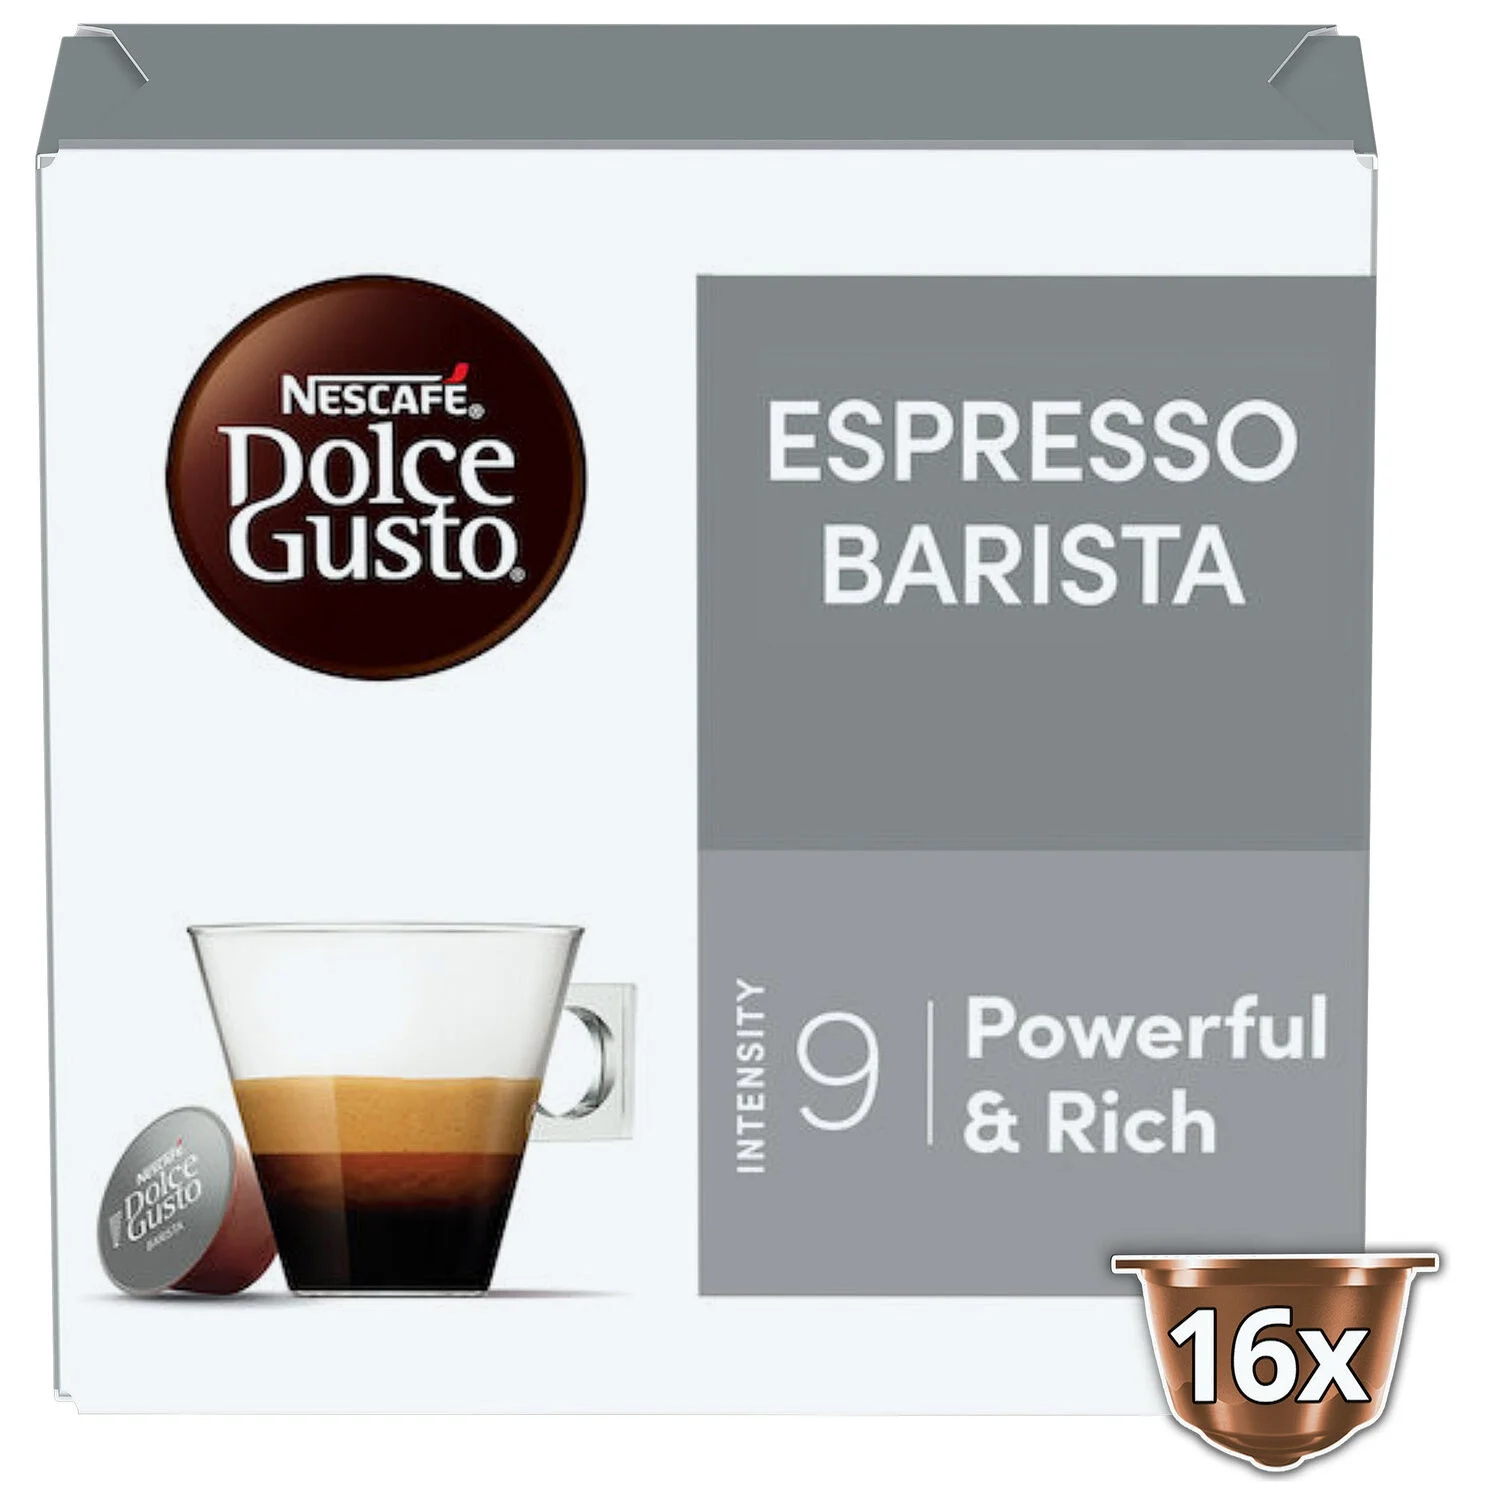 Ndg Espresso Barista 104g